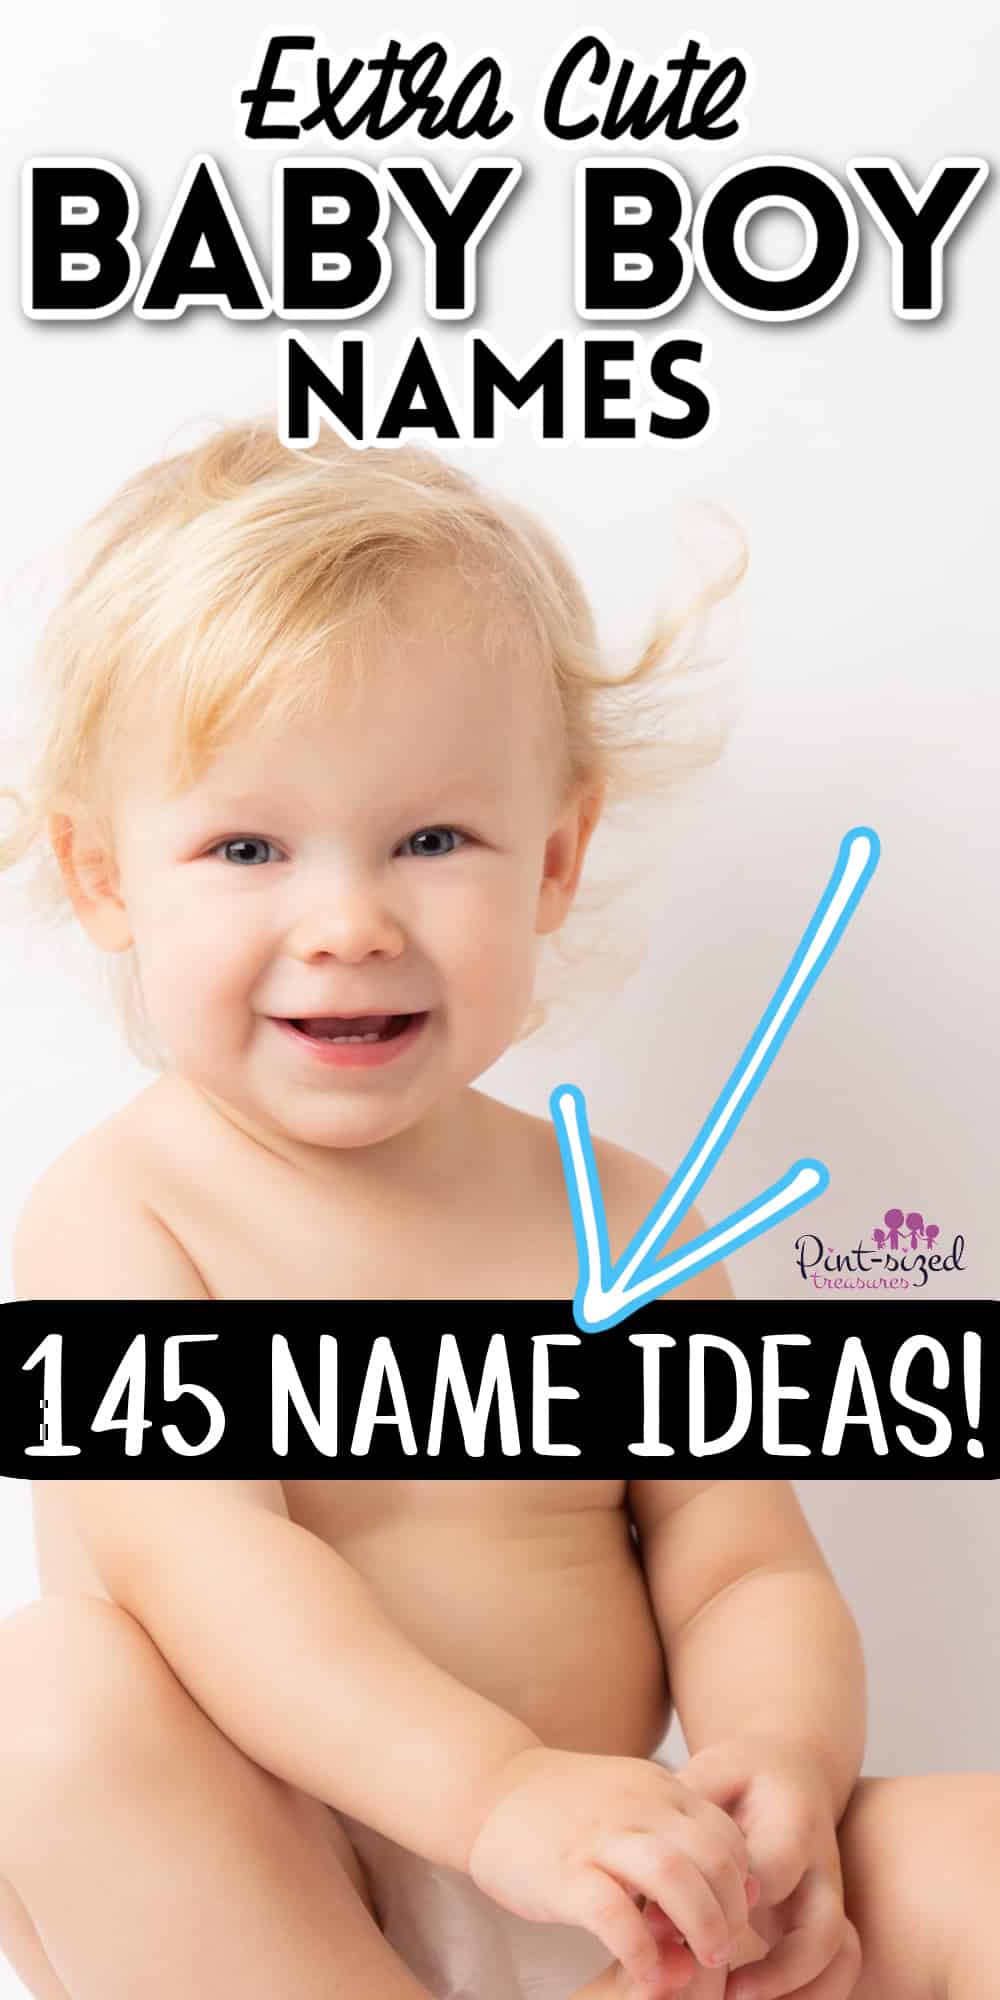 extra cute baby boy names